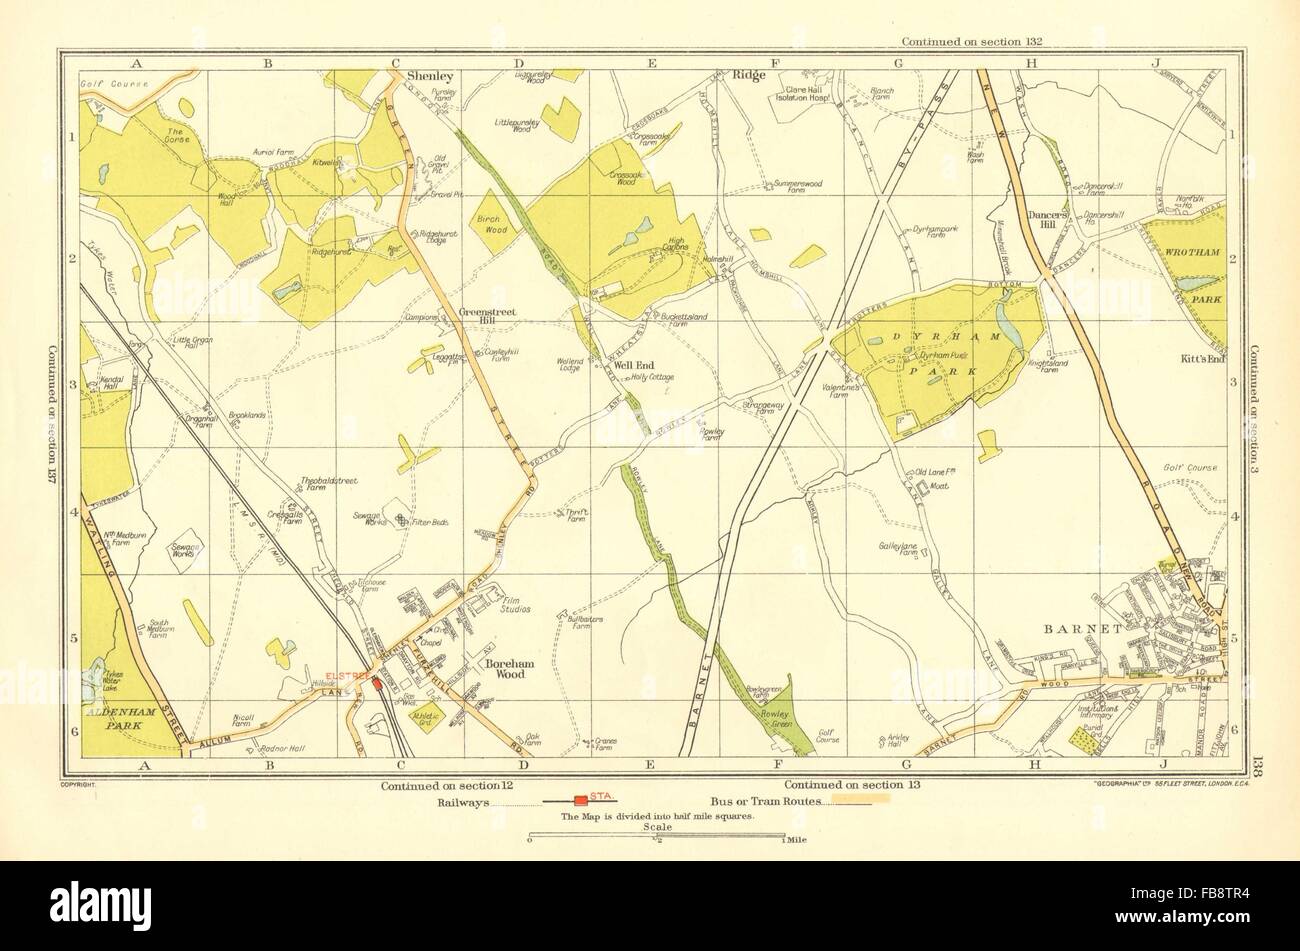 BOREHAMWOOD. Elstree, Barnet, Shenley, Ridge, Monken Hadley, 1933 vintage map Stock Photo